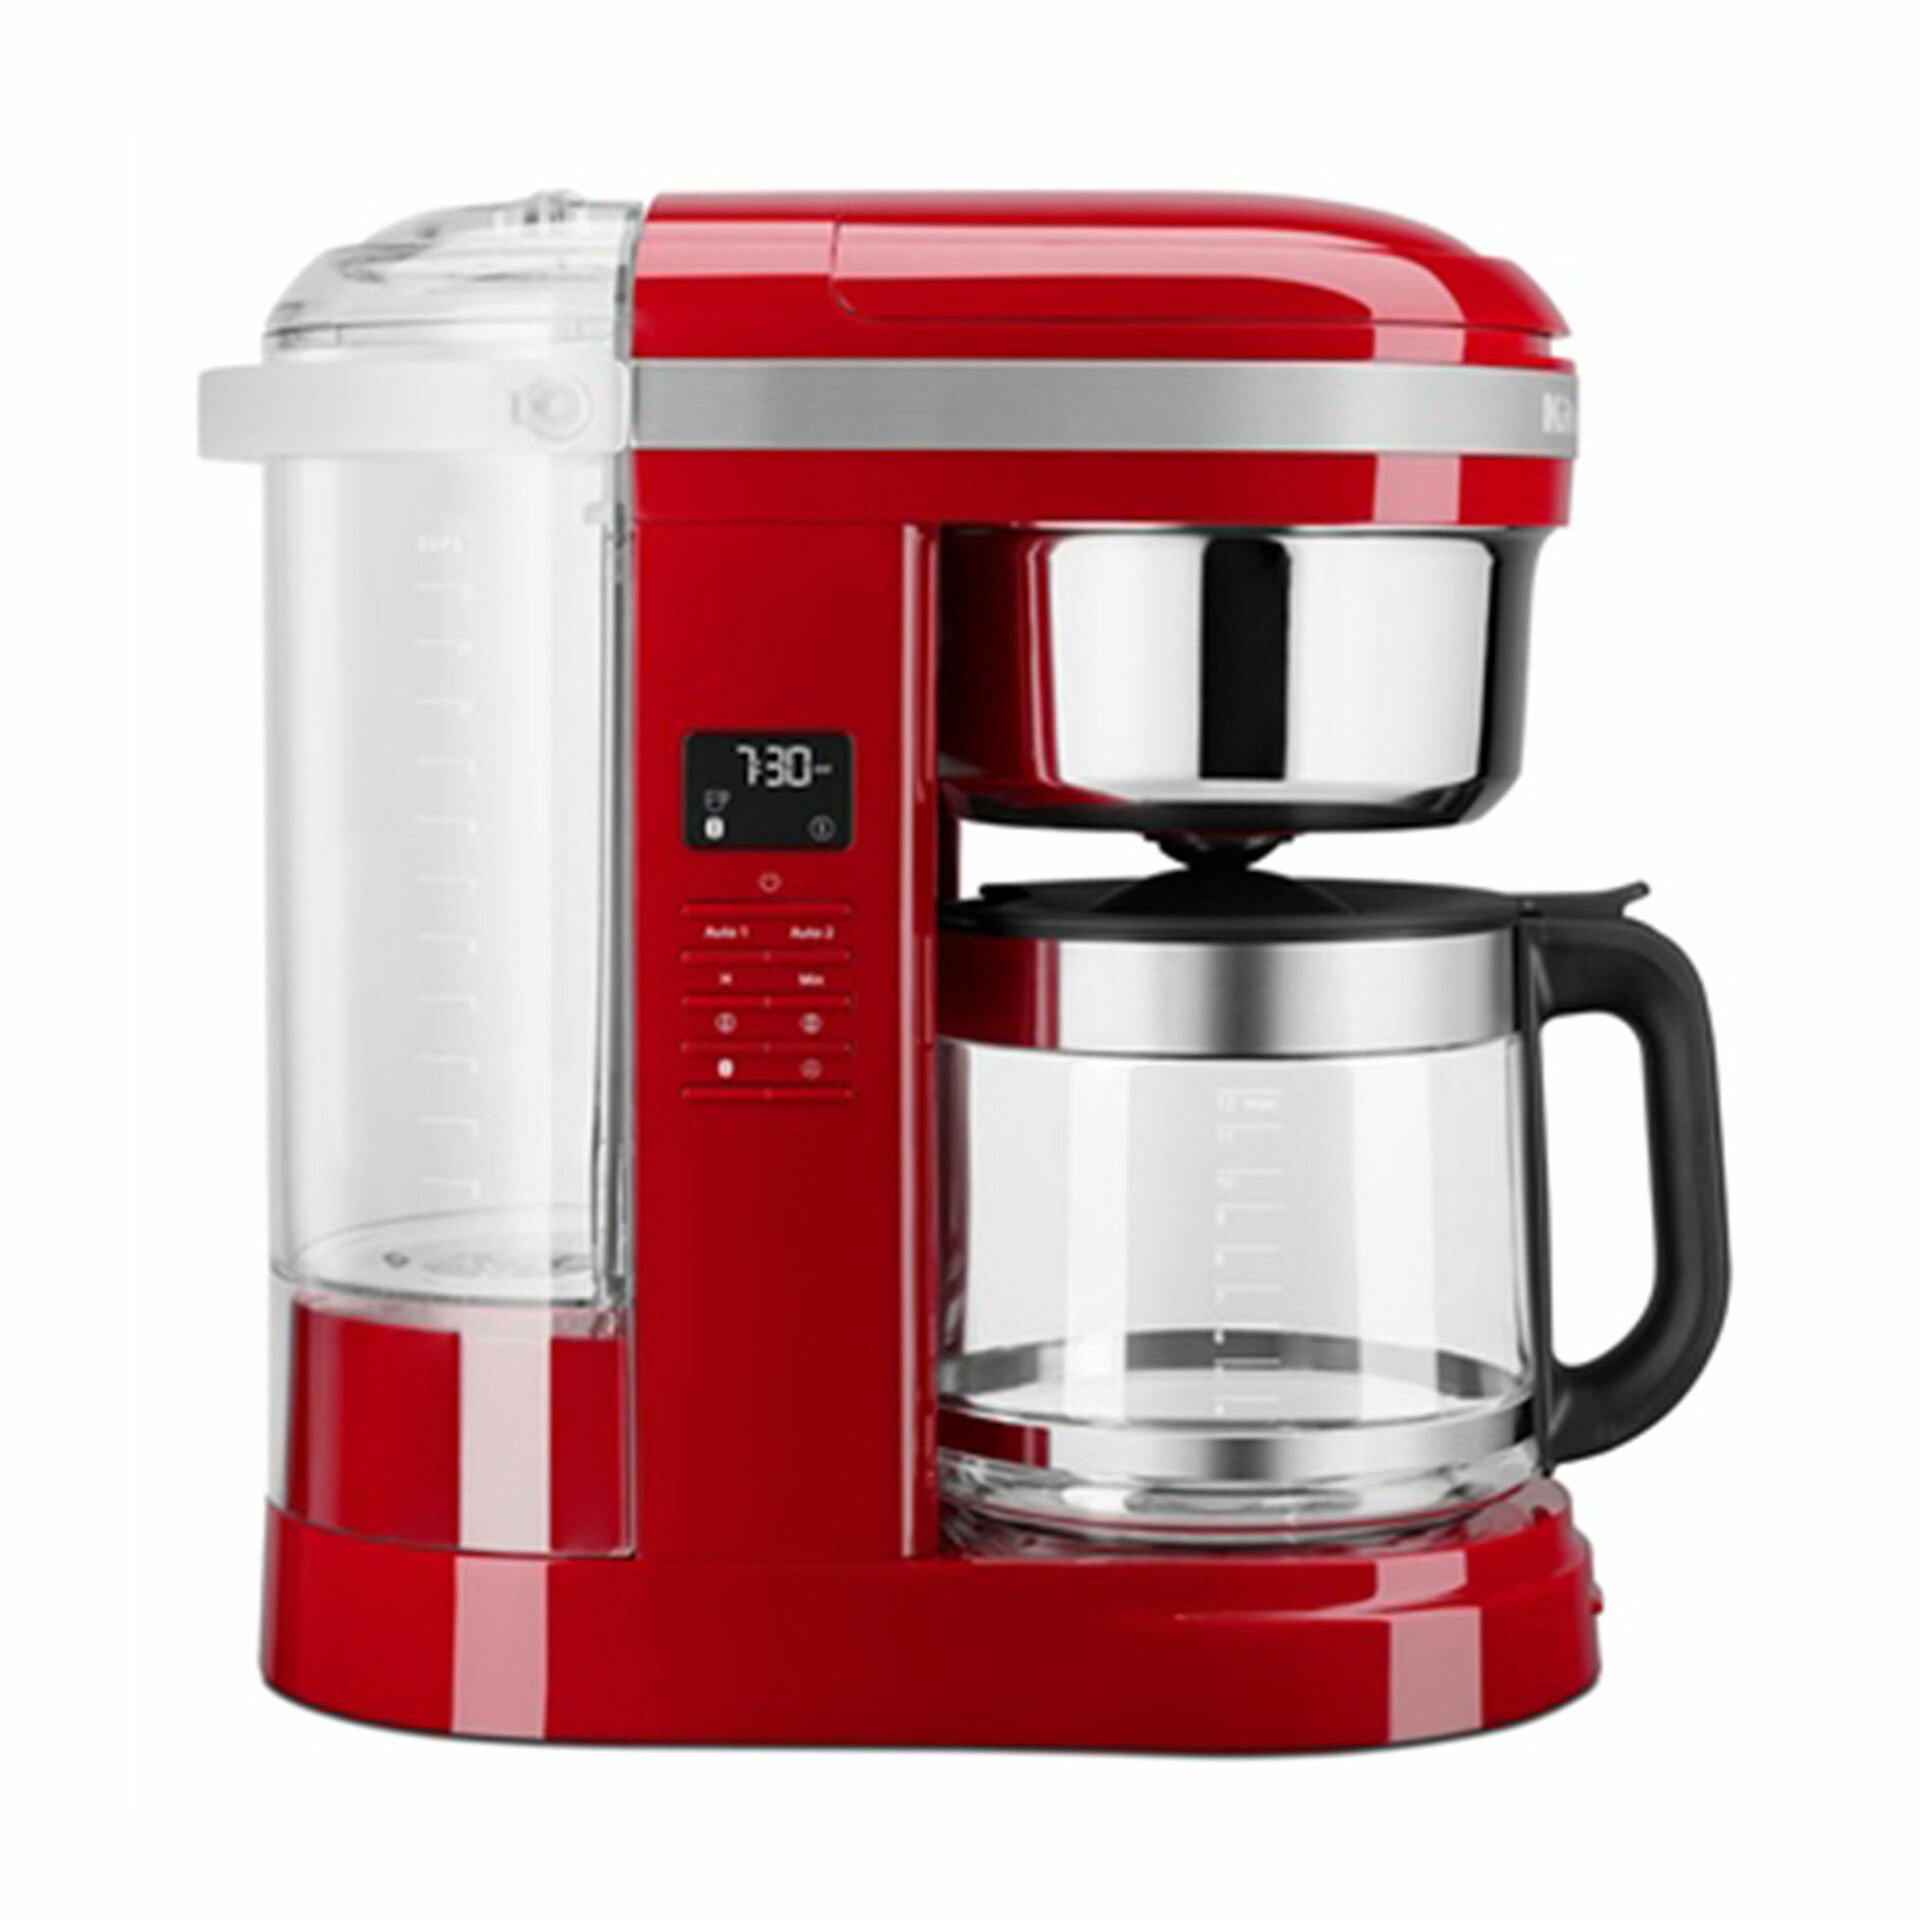 KitchenAid Filtre Kahve Makinesi 5KCM1209 - Empire Red